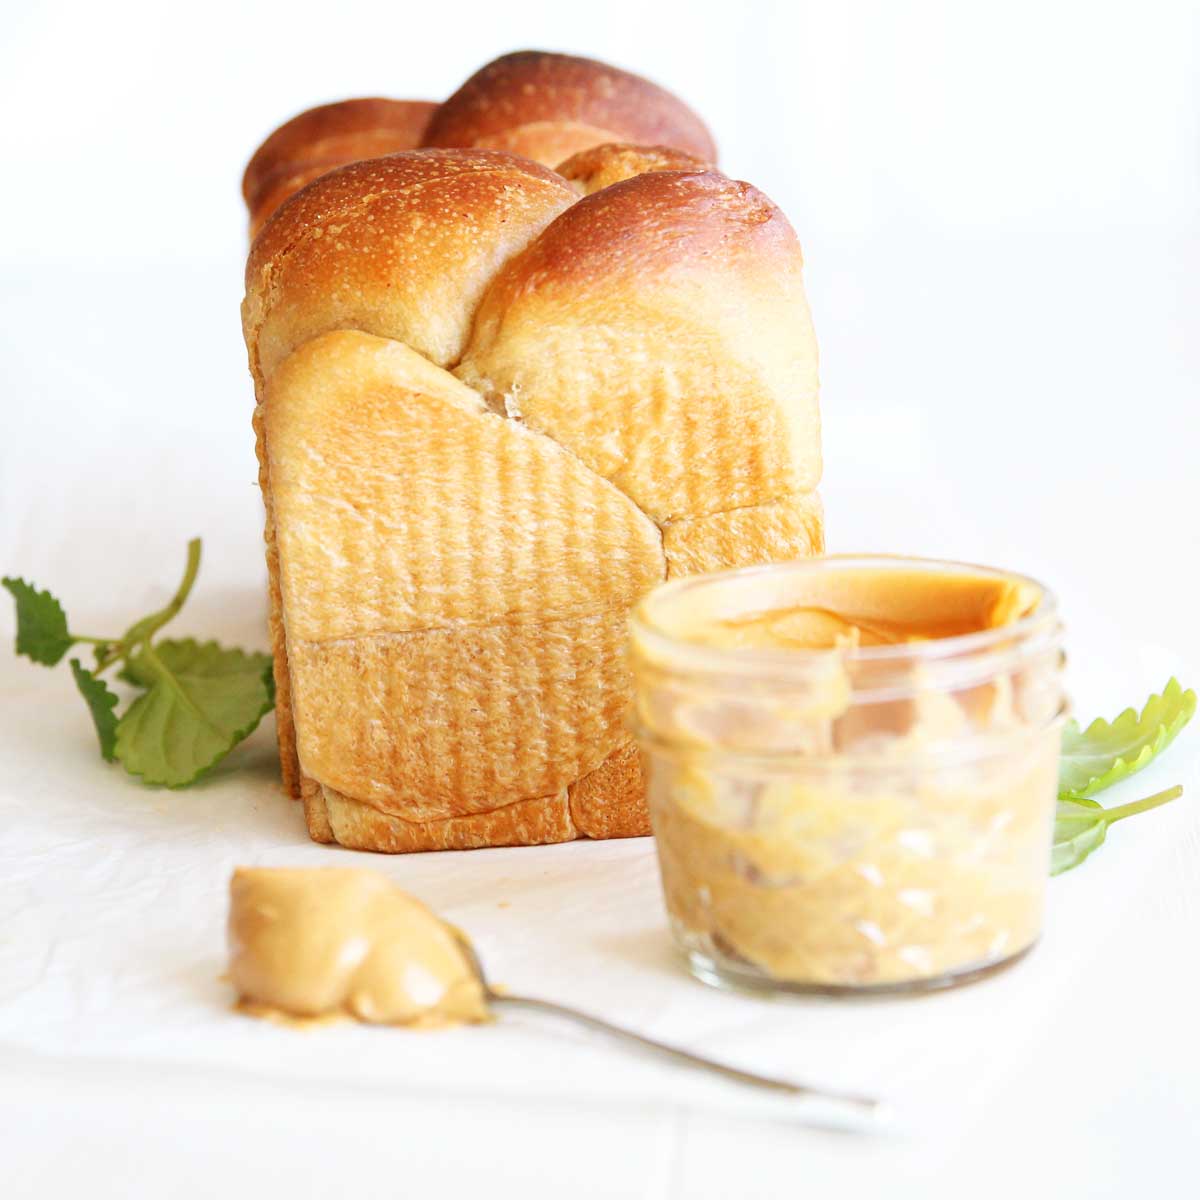 Peanut Butter Yeast Bread (A Healthier Vegan "Brioche" Recipe) - yeast bread